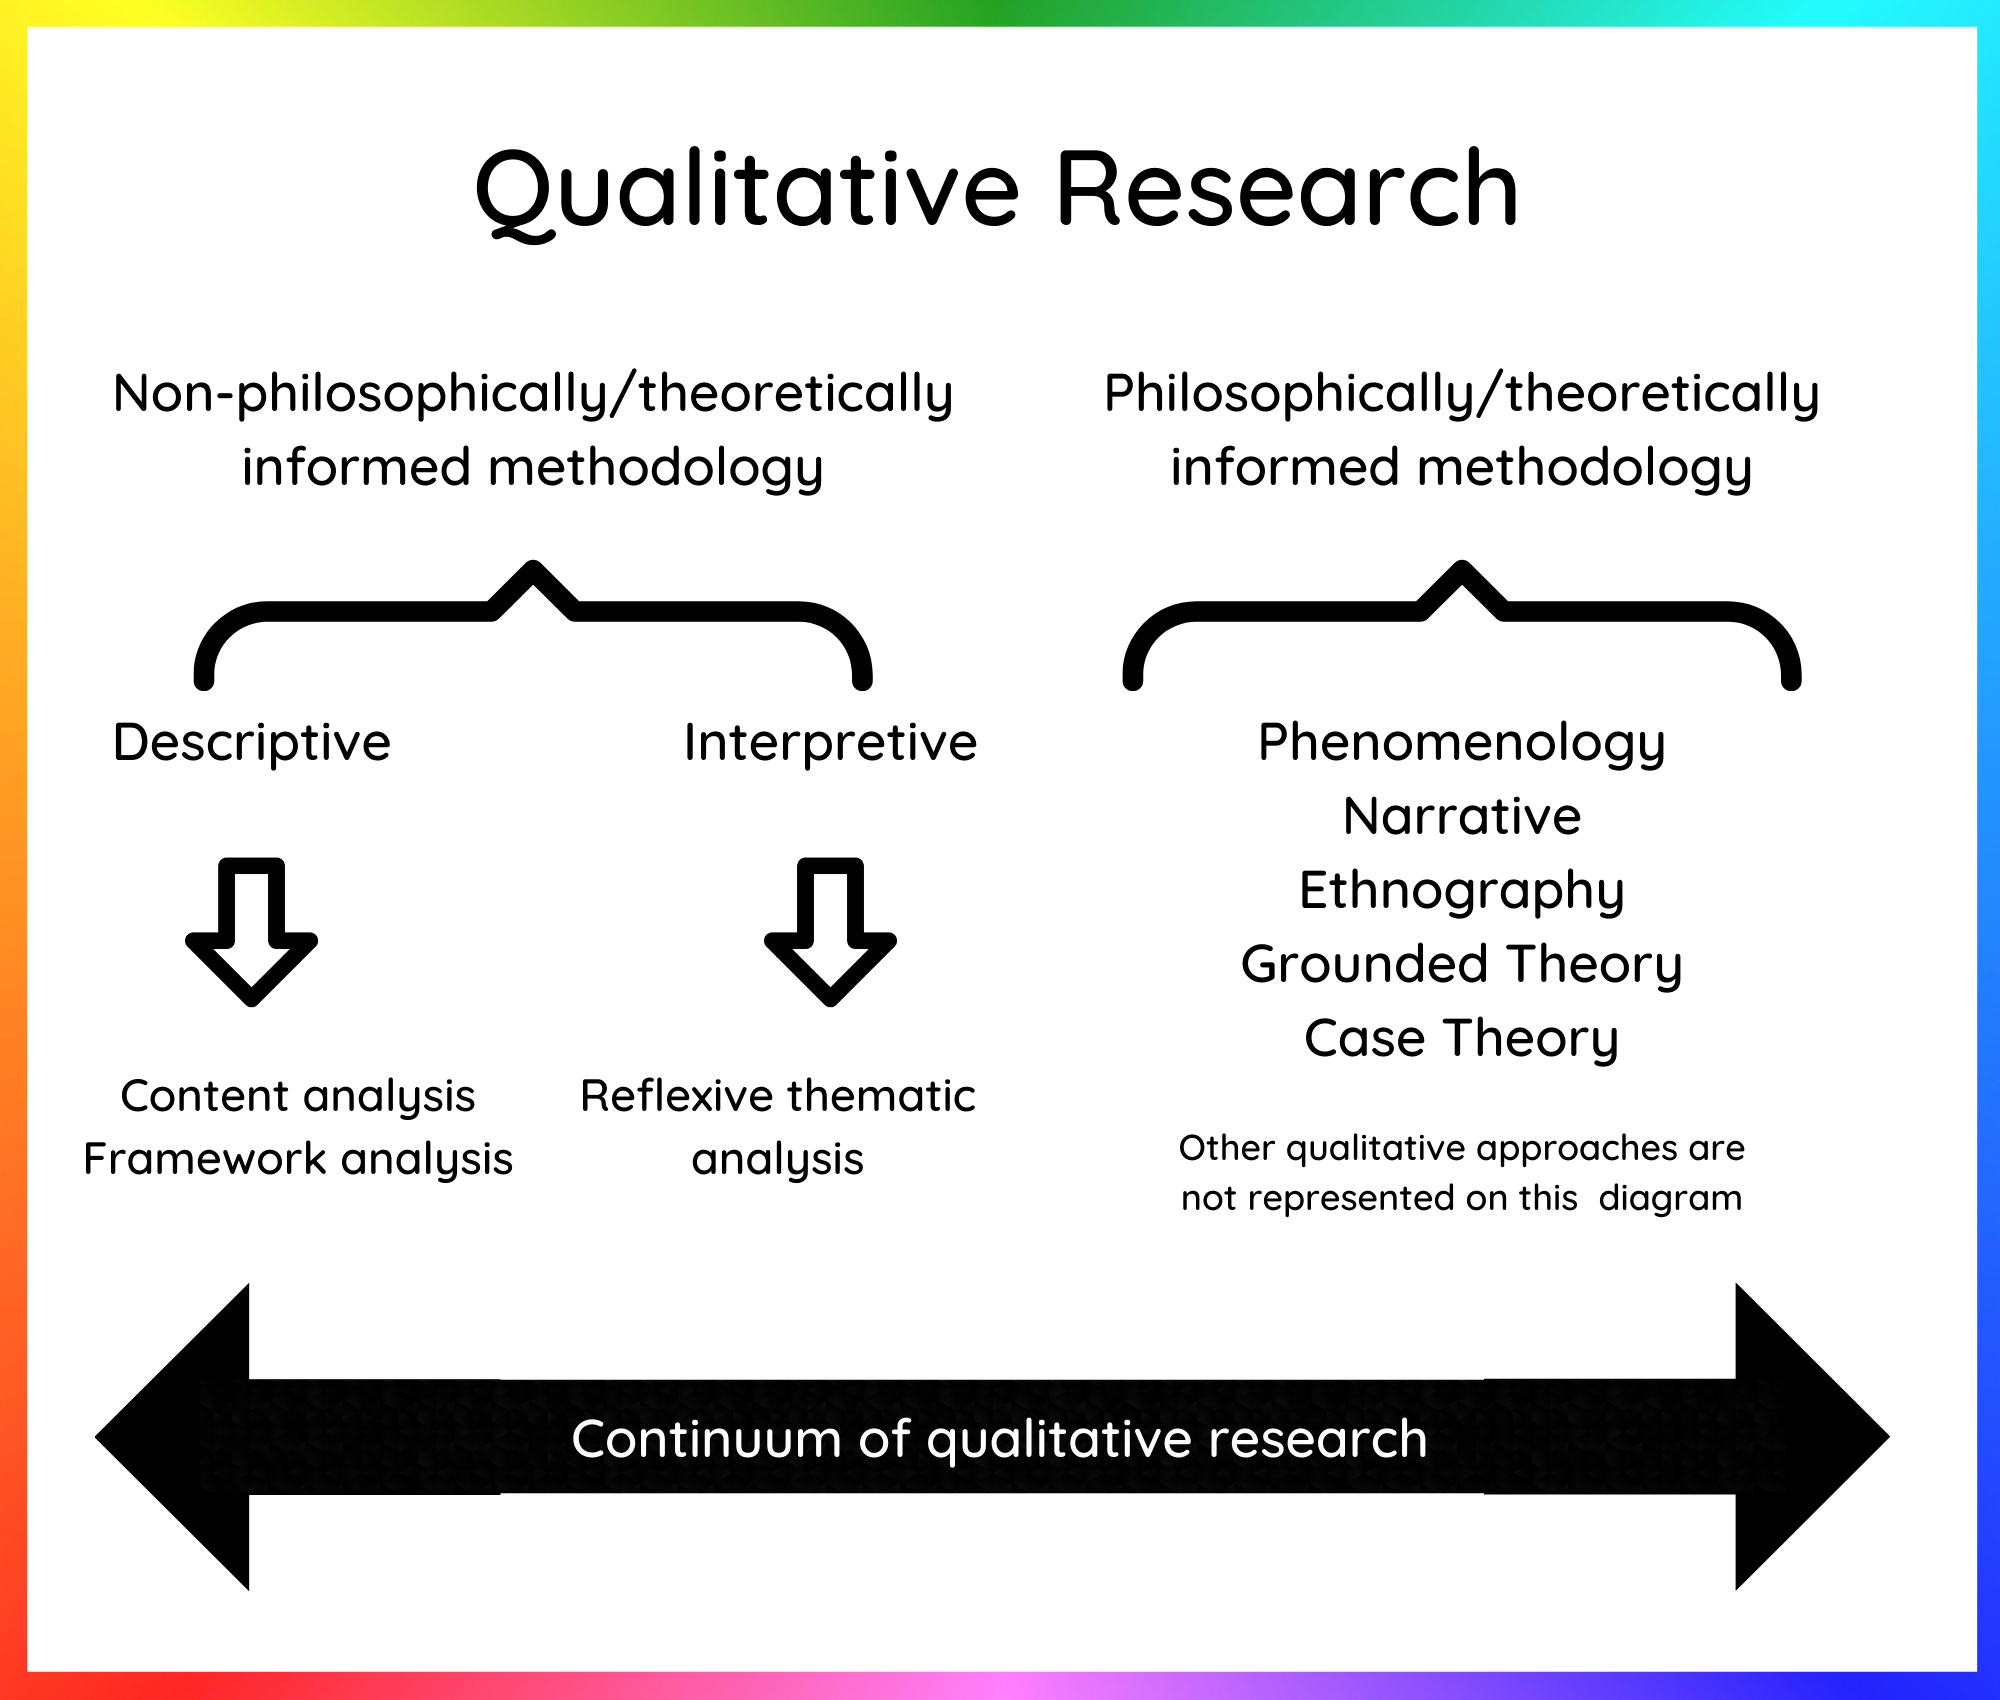 Figure 2: Continuum of qualitative research